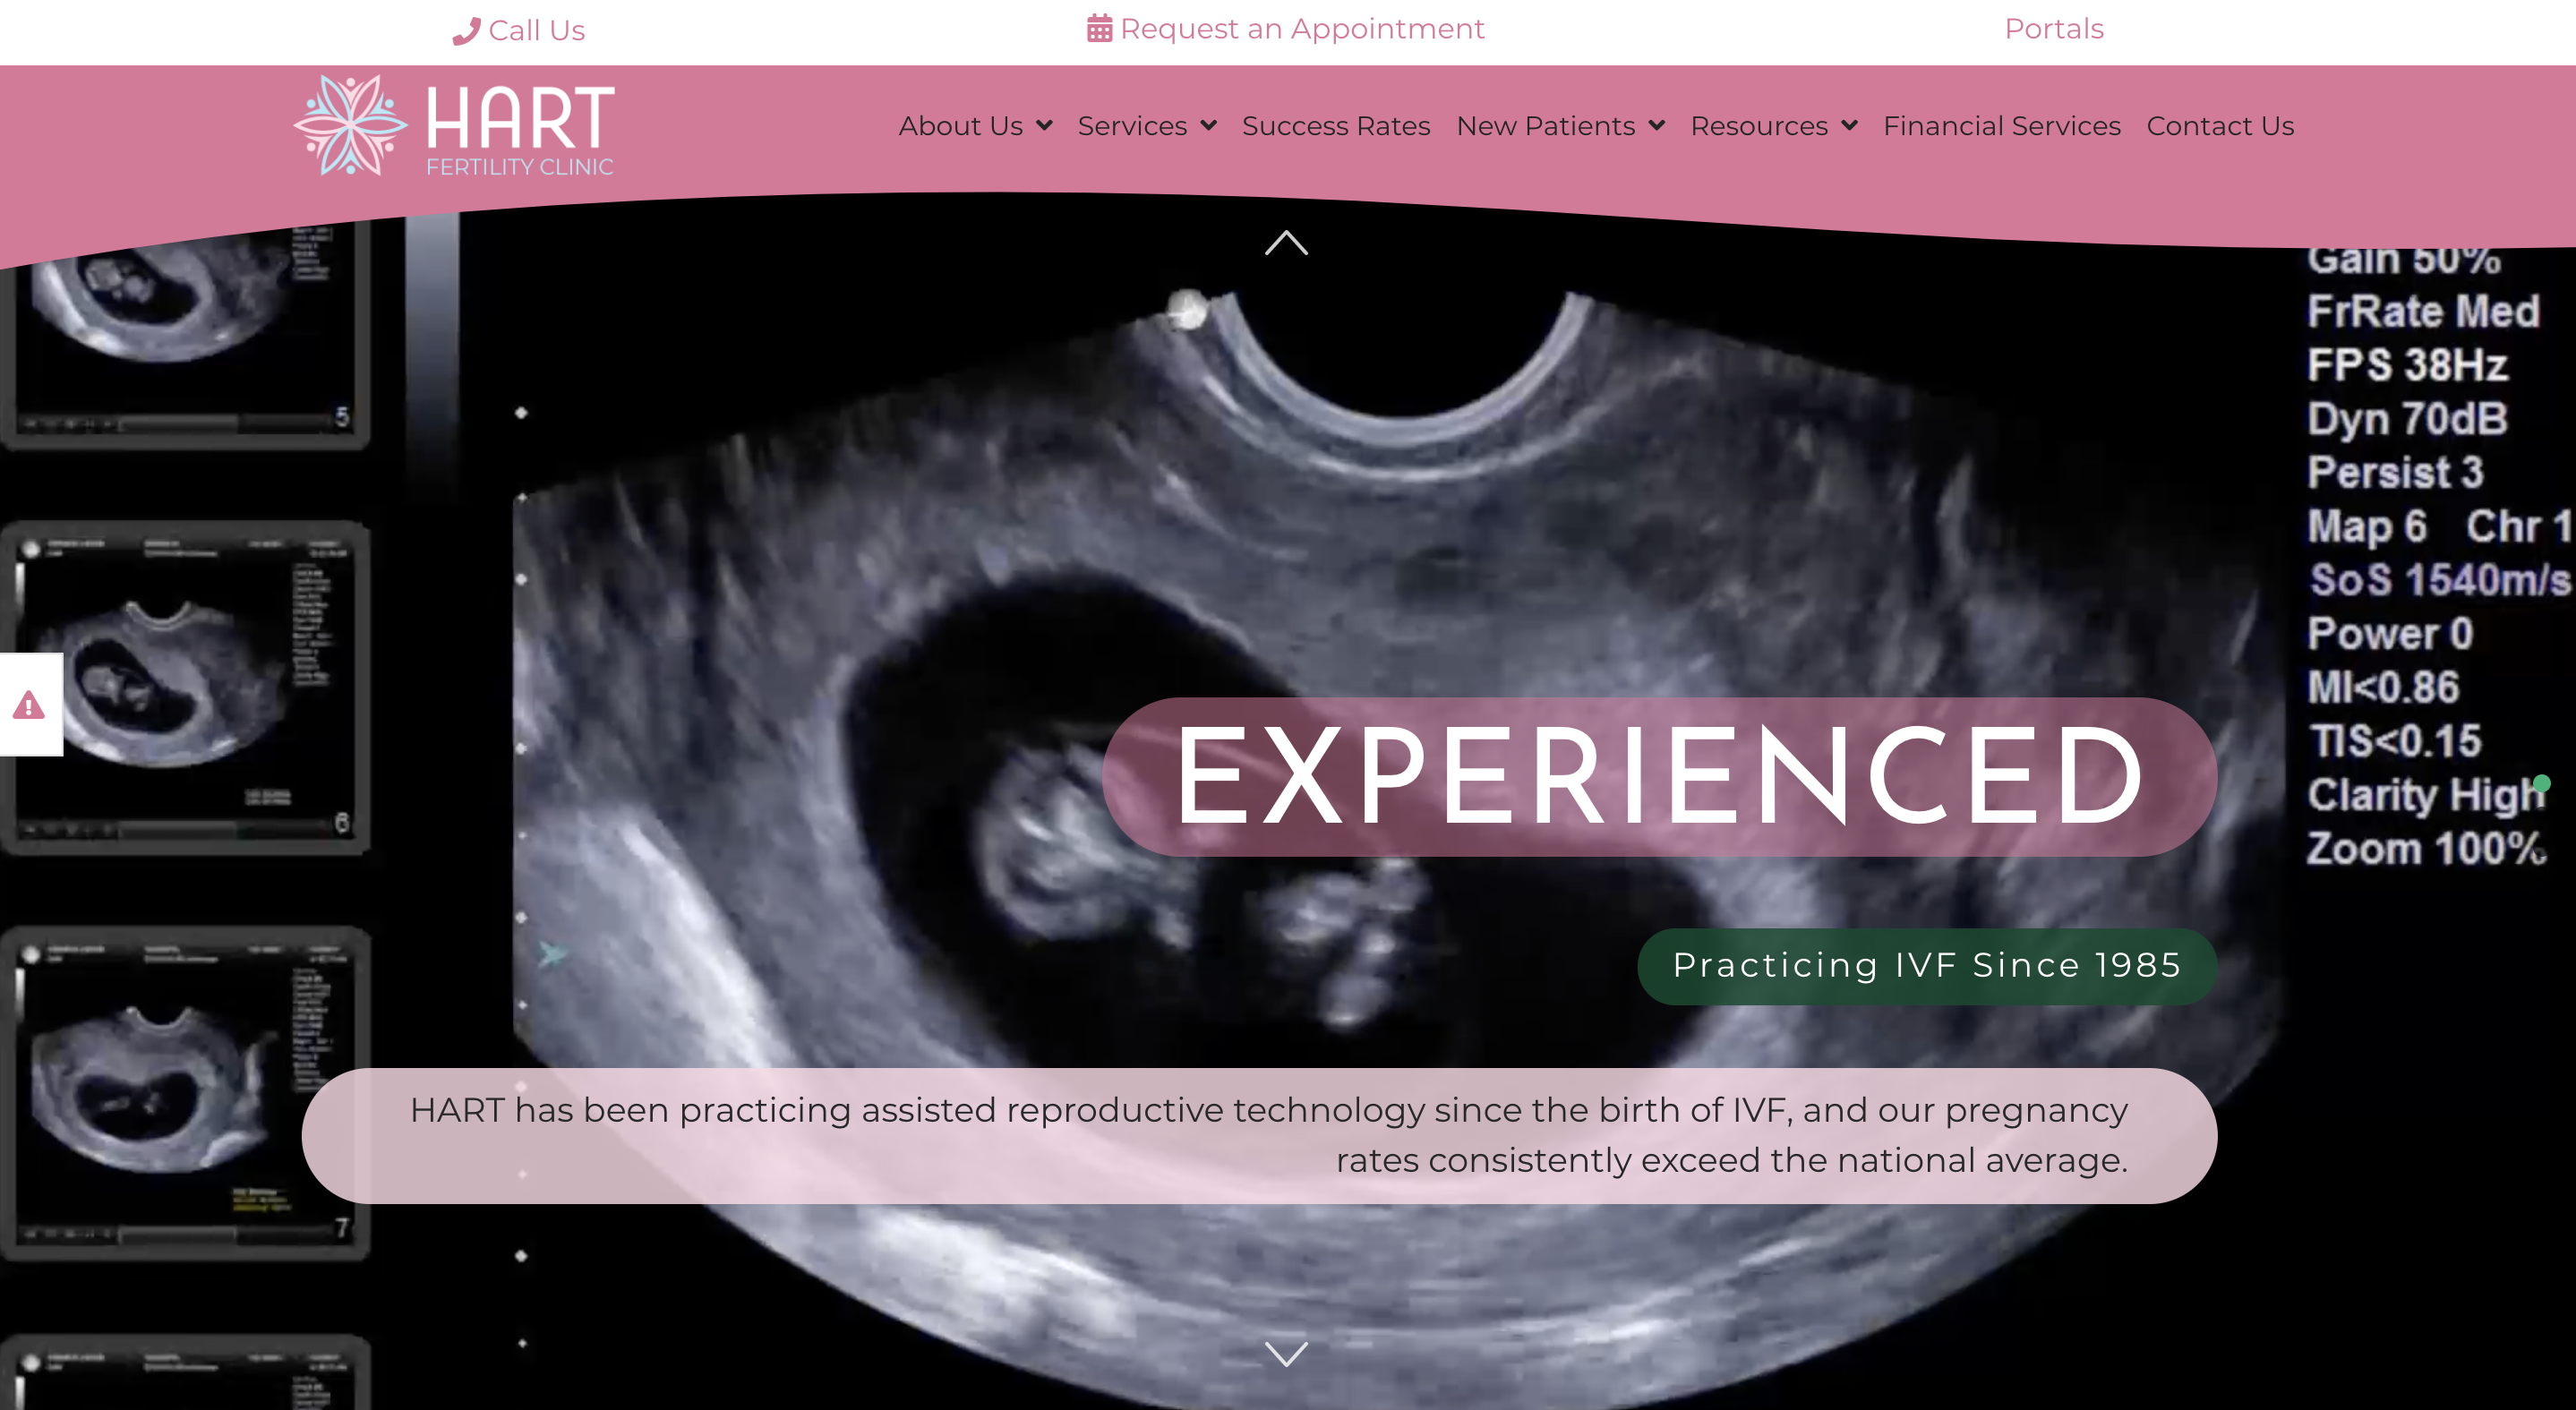 HART North Houston Fertility Clinic homepage slide 2